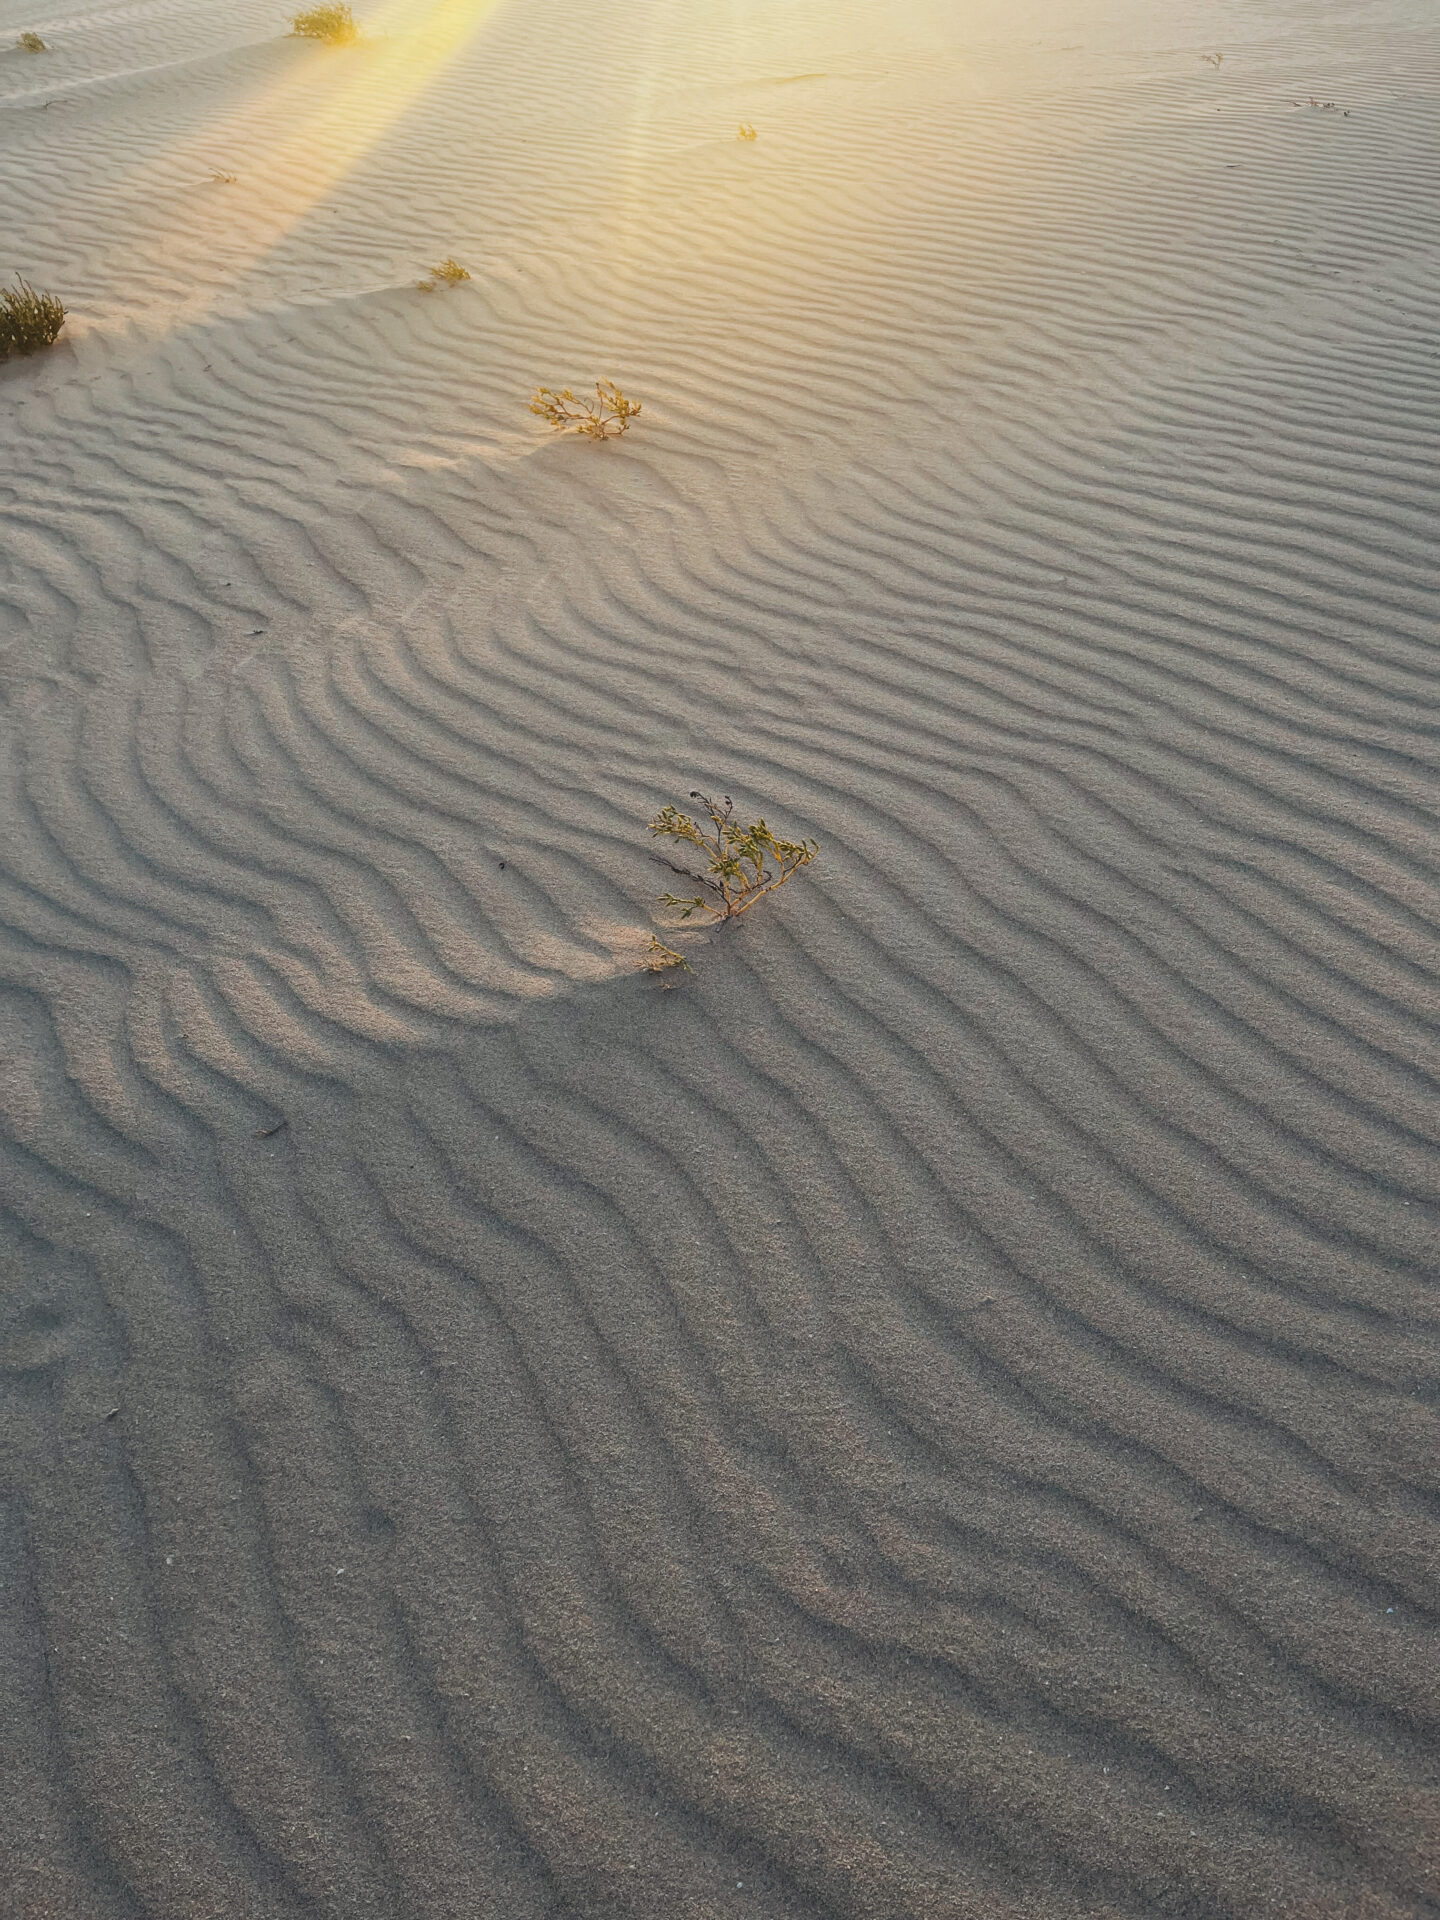 Dunas de Corralejo sand textures, by Dancing the Earth